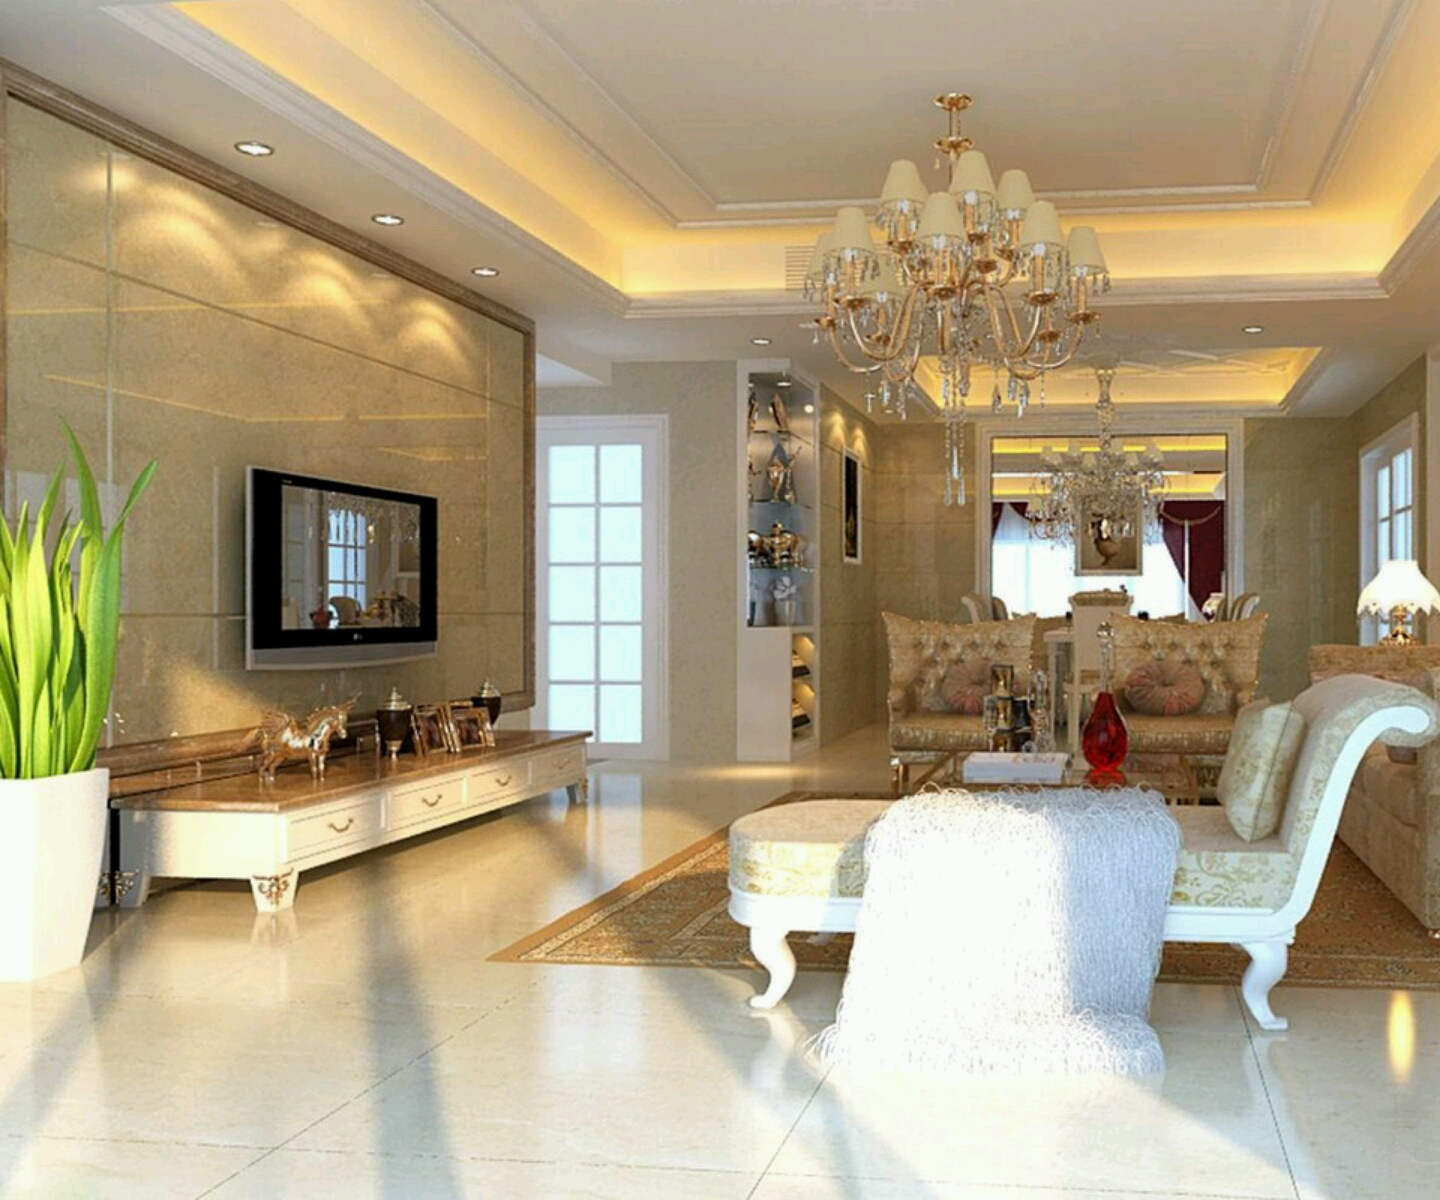 Home Decor 2012: Luxury homes interior decoration living room designs